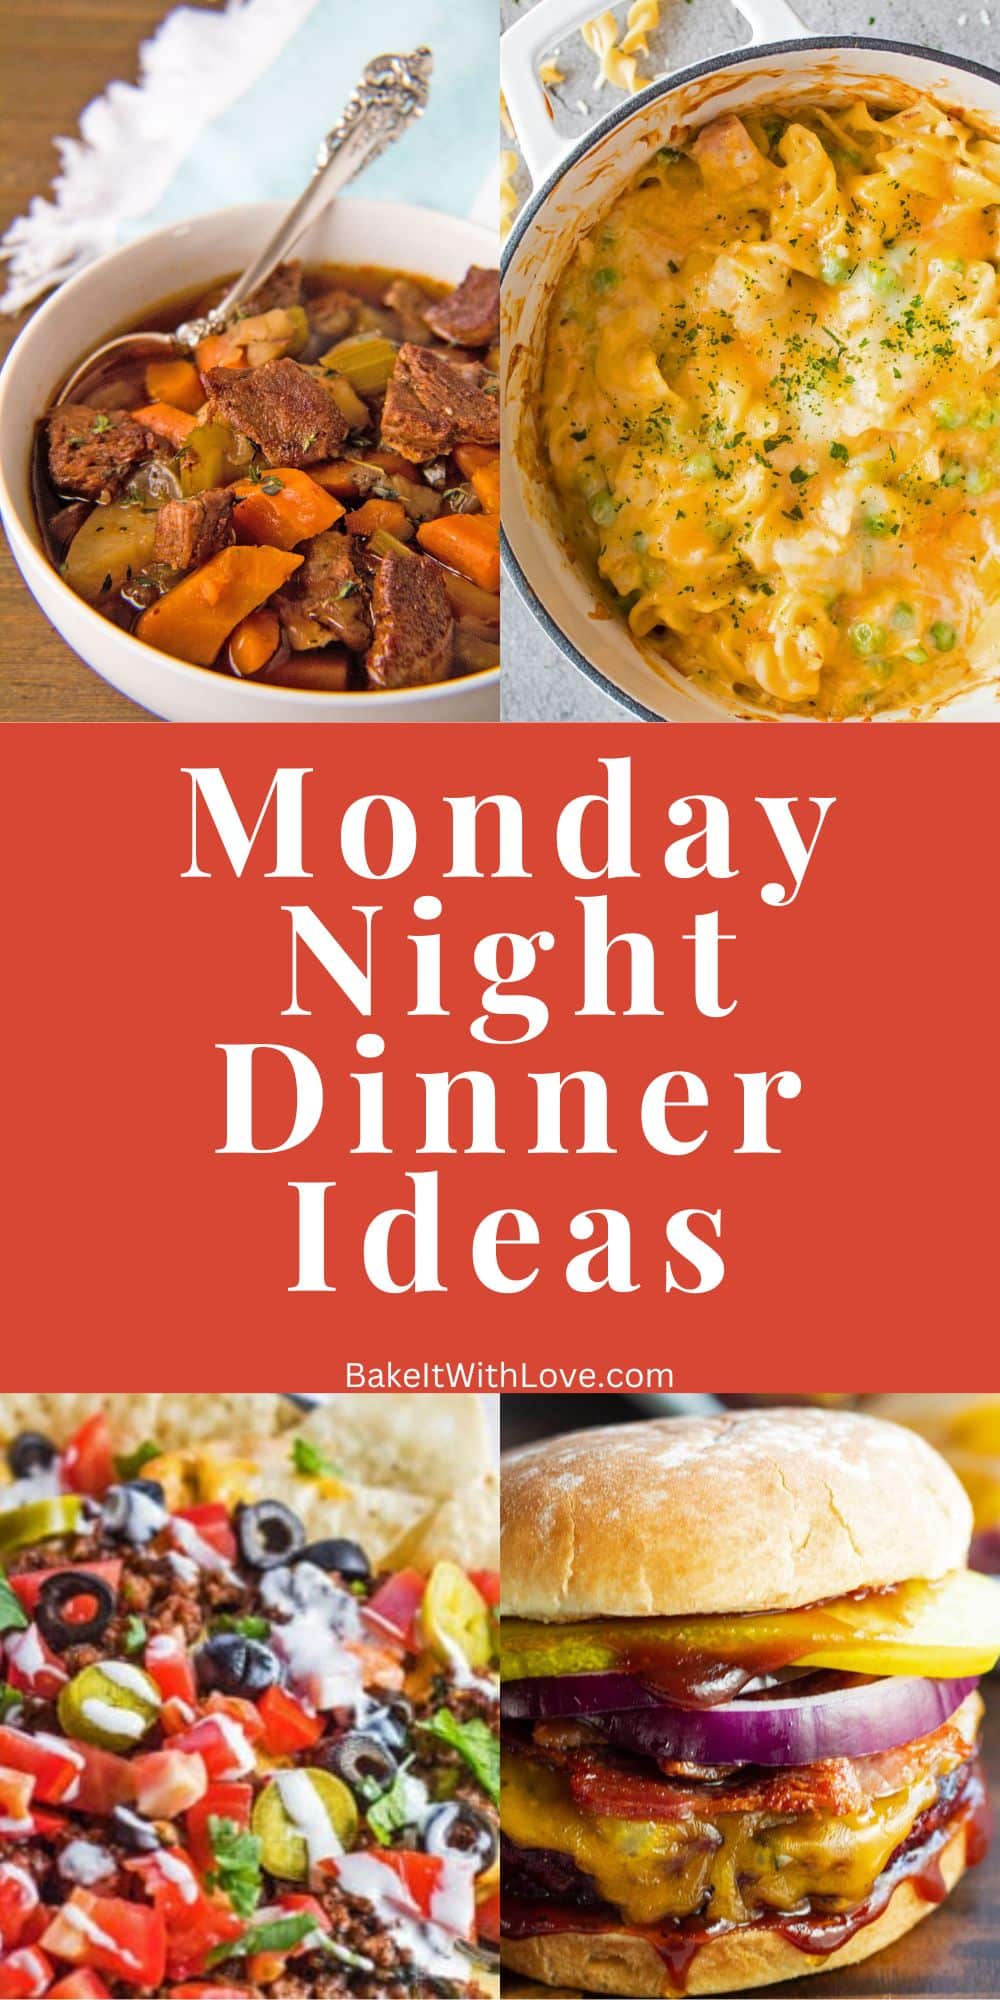 Monday Night Dinner Ideas: Easy Family Favorite Recipes